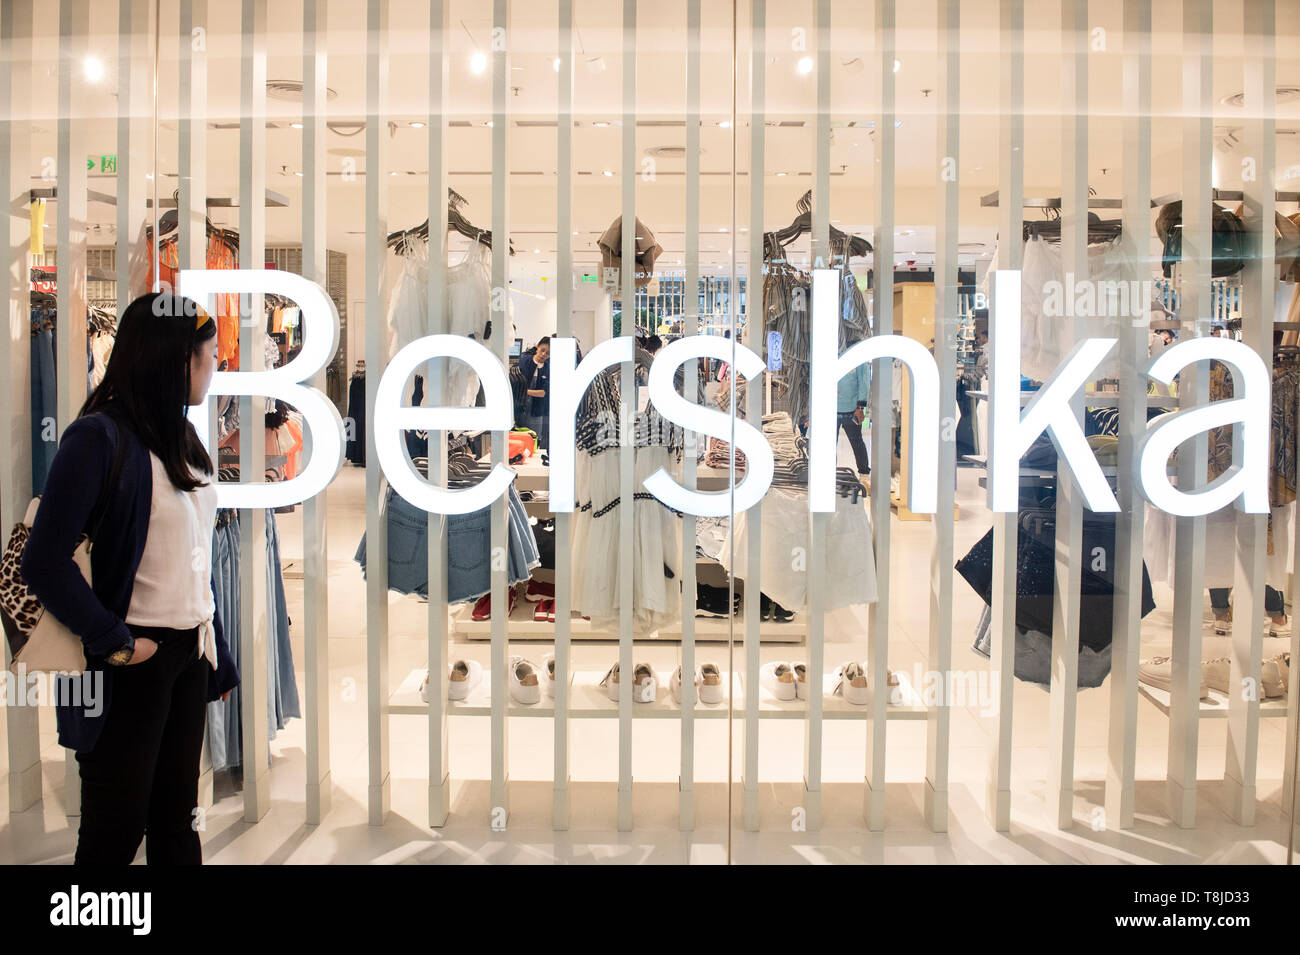 Spanish multinational clothing company brand Bershka store seen in Hong Kong shopping mall. Stock Photo